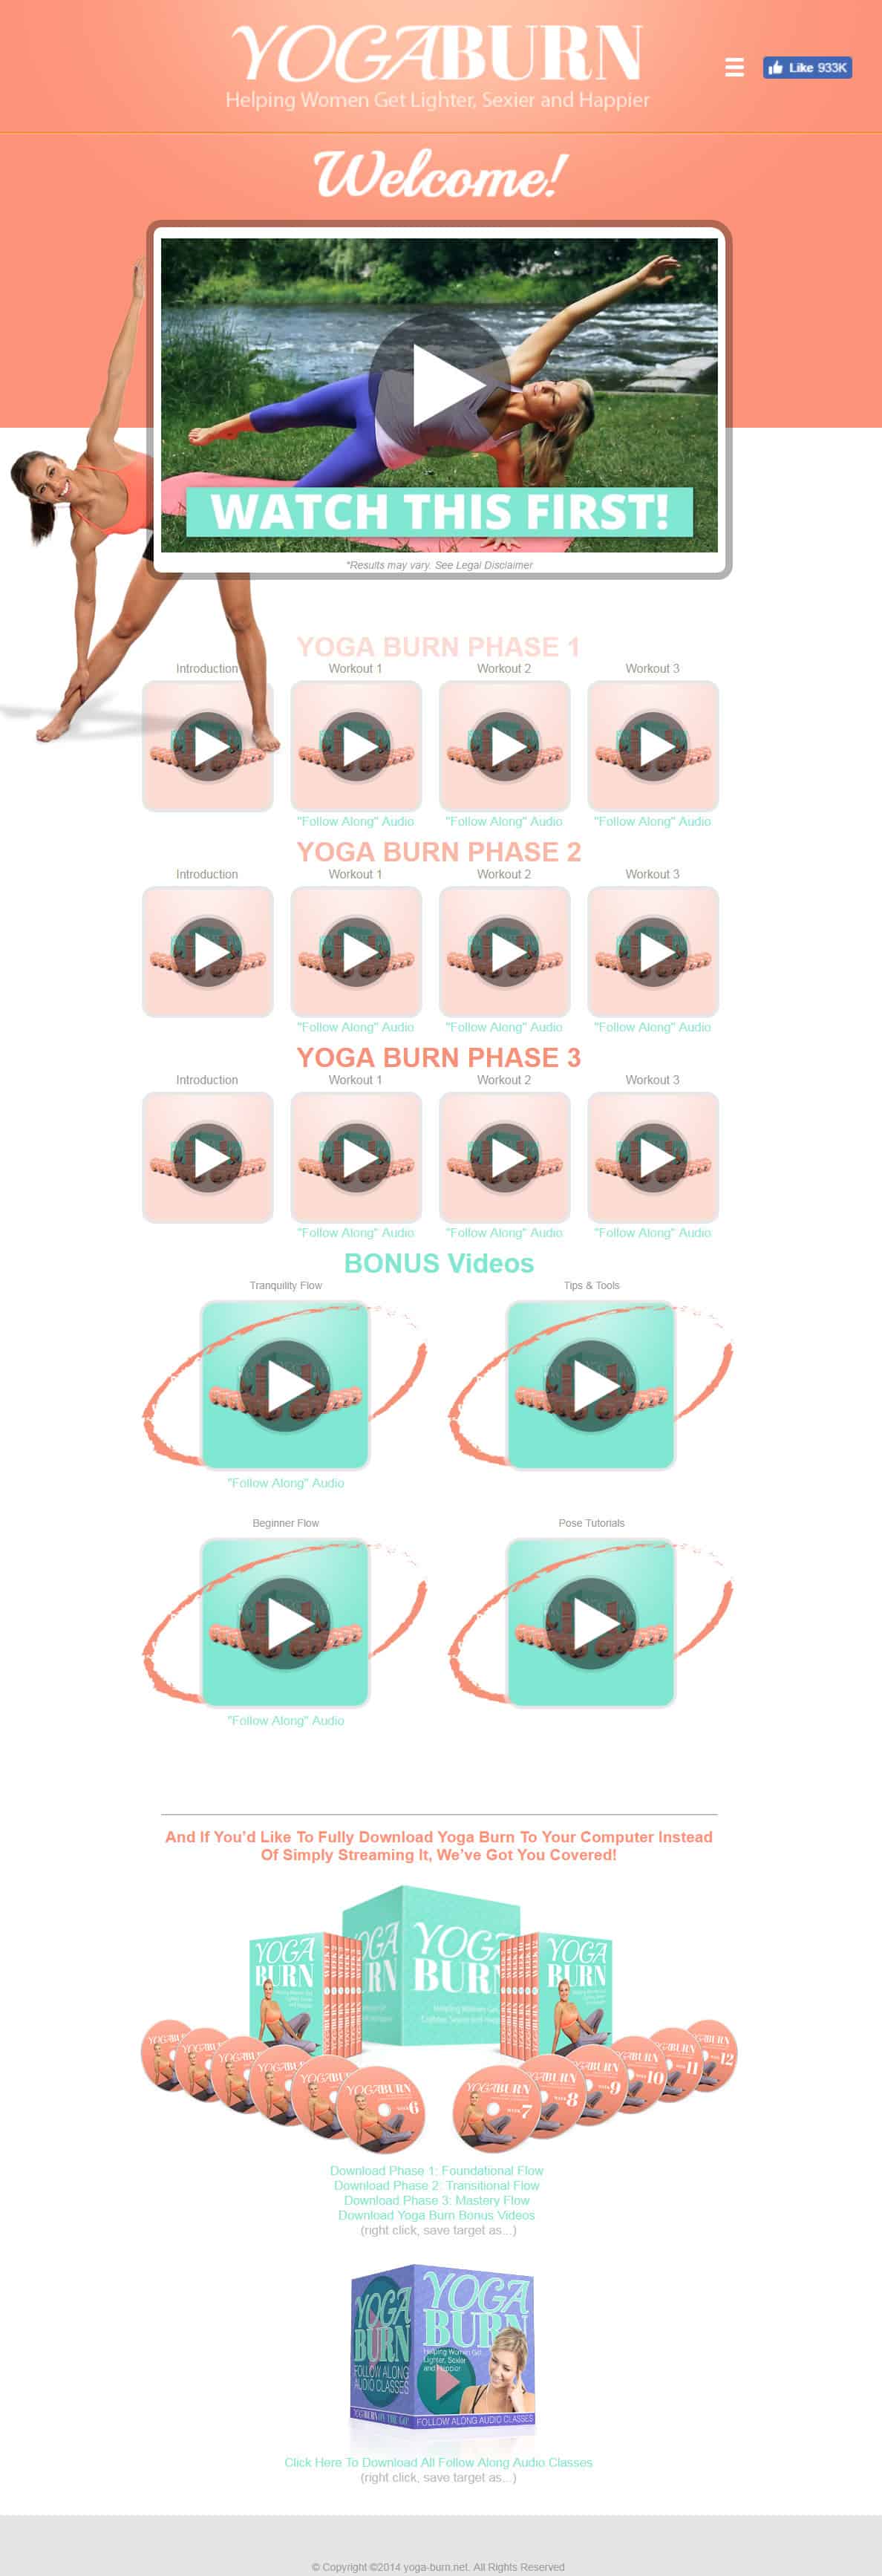 Yoga Burn Download Page